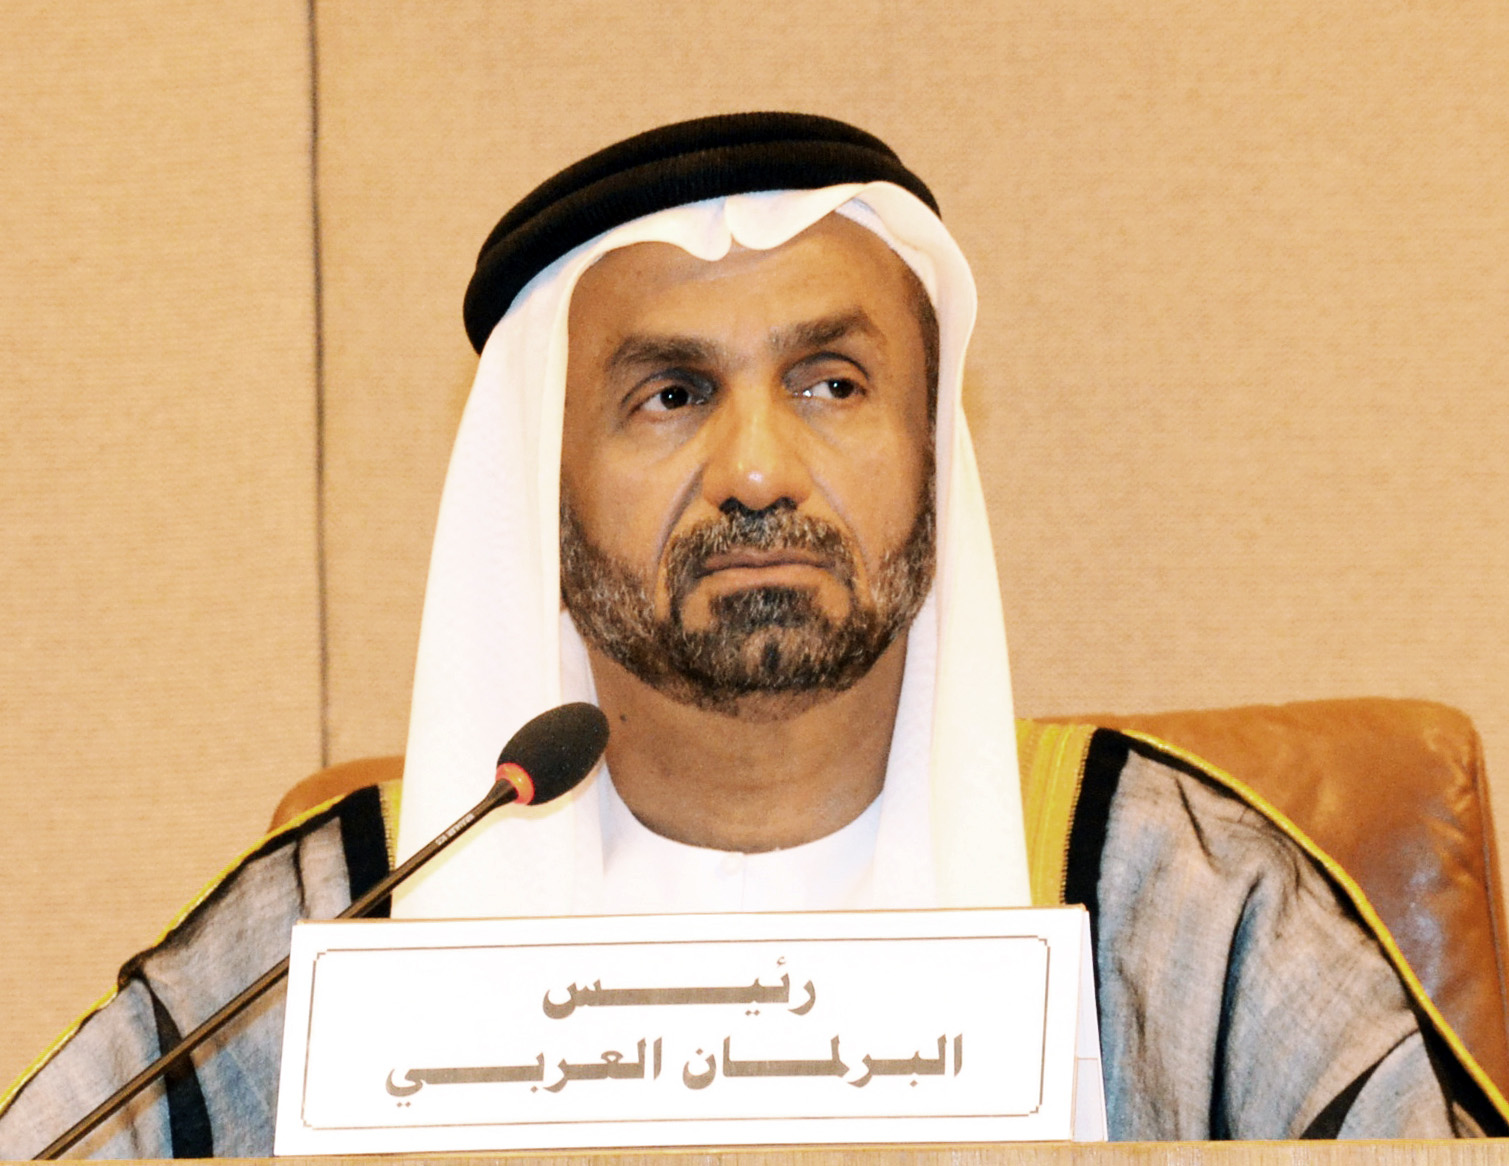 President of the Arab Parliament Ahmed bin Mohammed Al-Jarwan